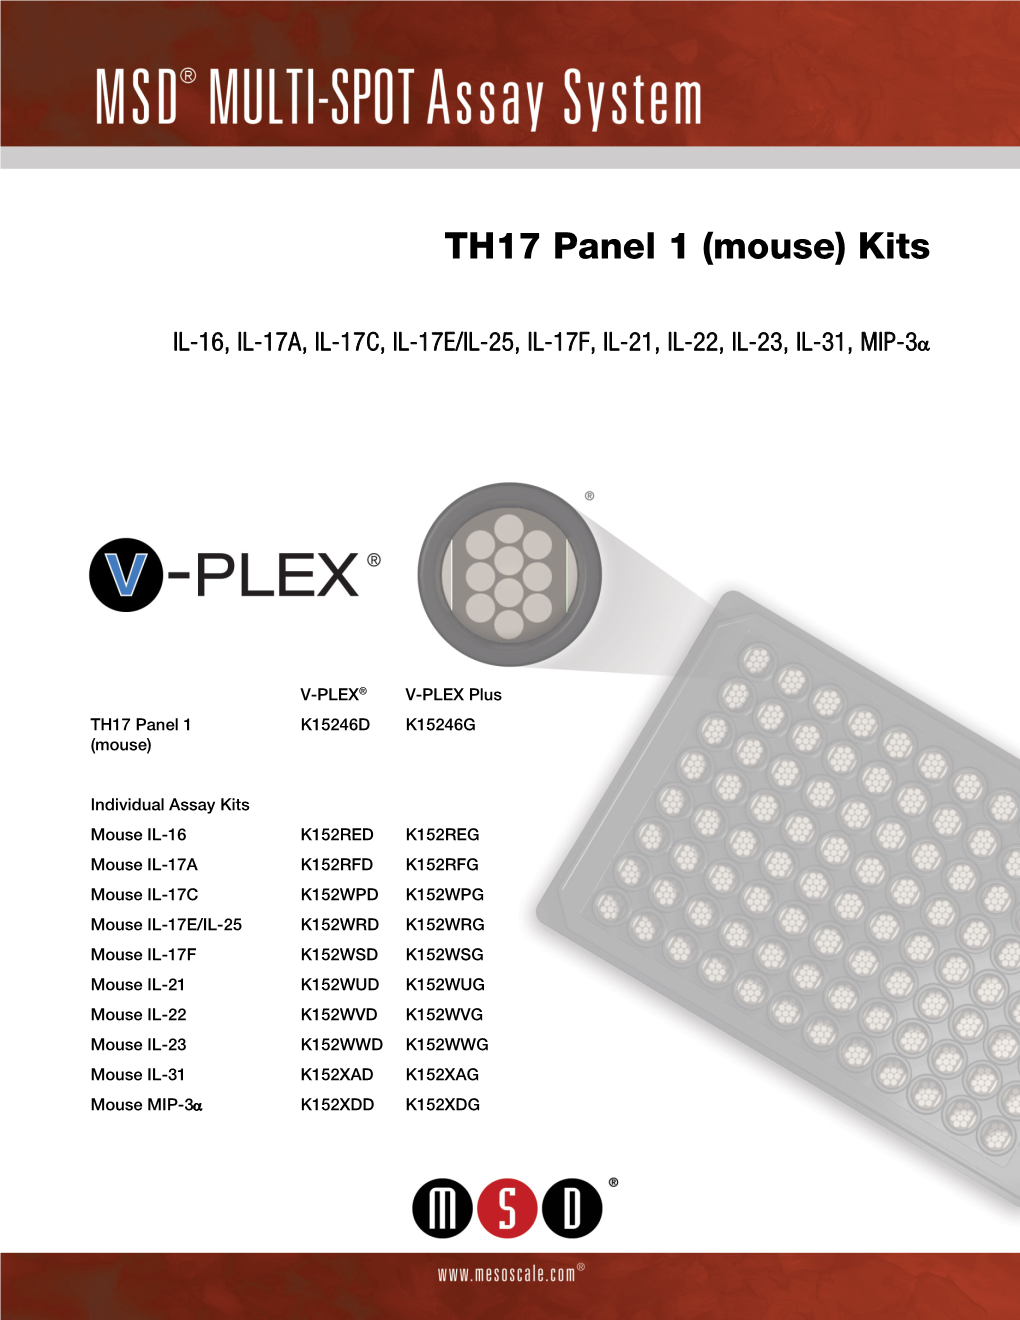 V-PLEX TH17 Panel 1 Mouse Product Insert